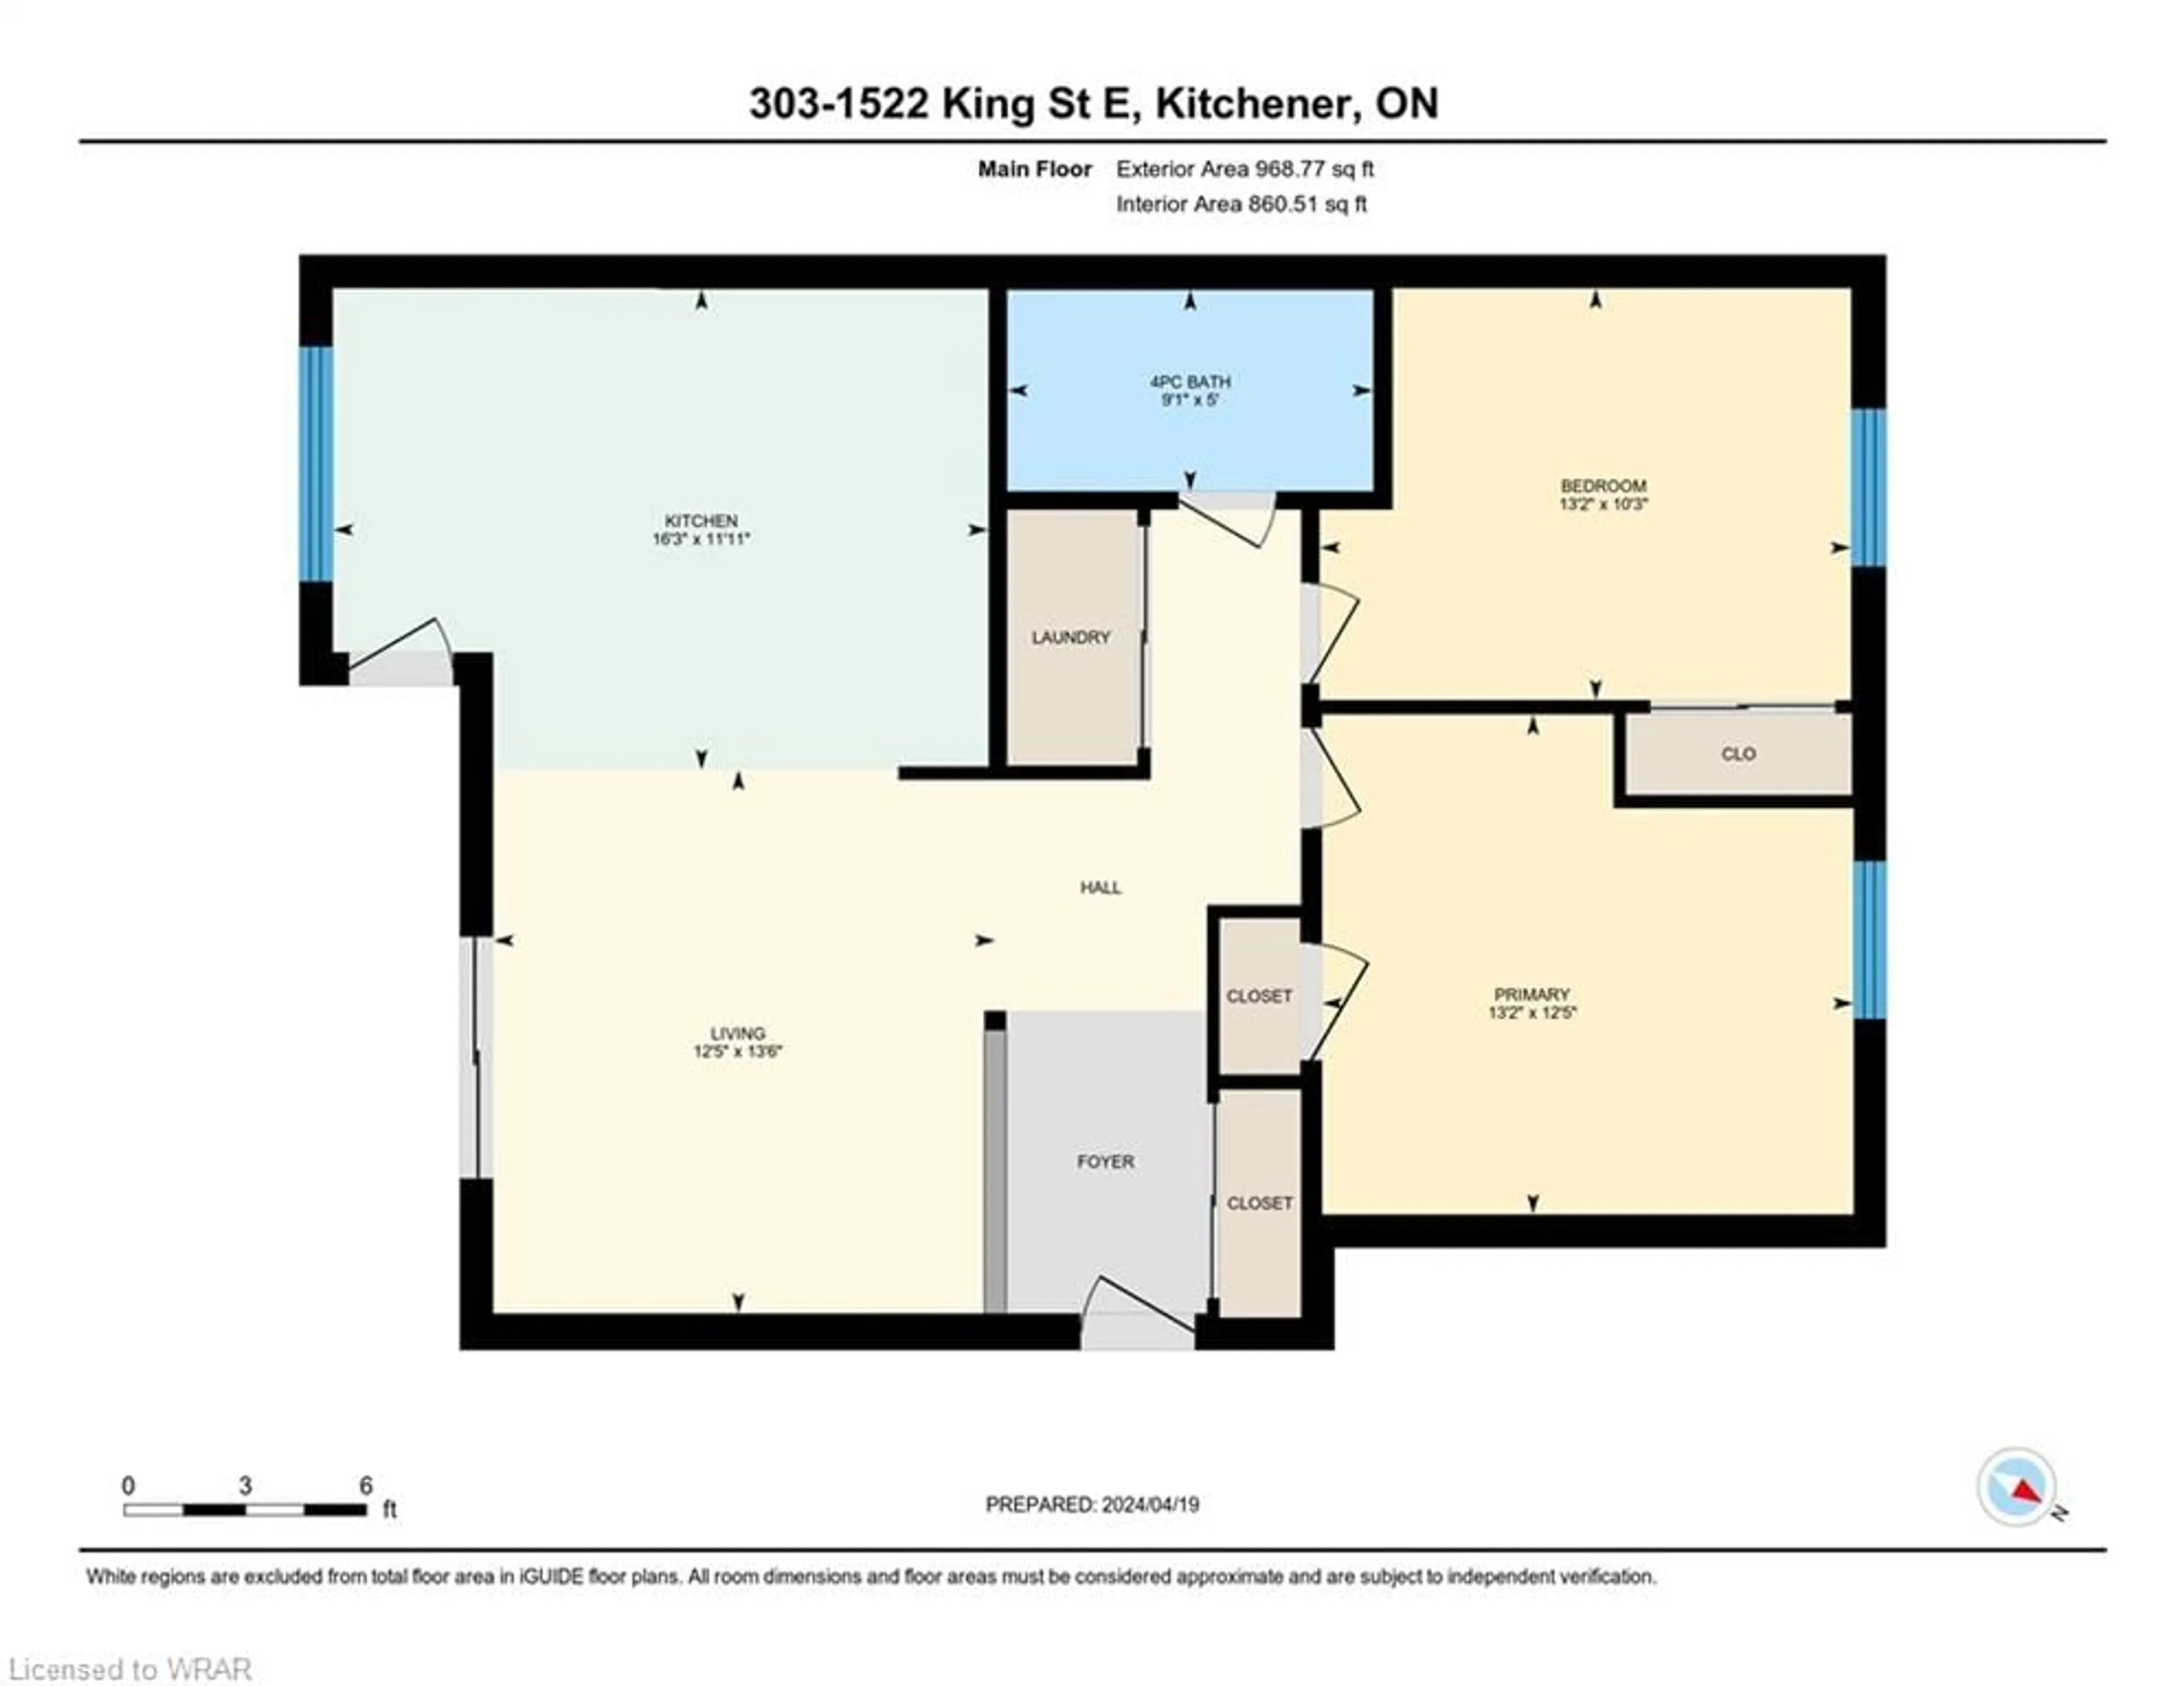 Floor plan for 1522 King St #303, Kitchener Ontario N2G 2P1